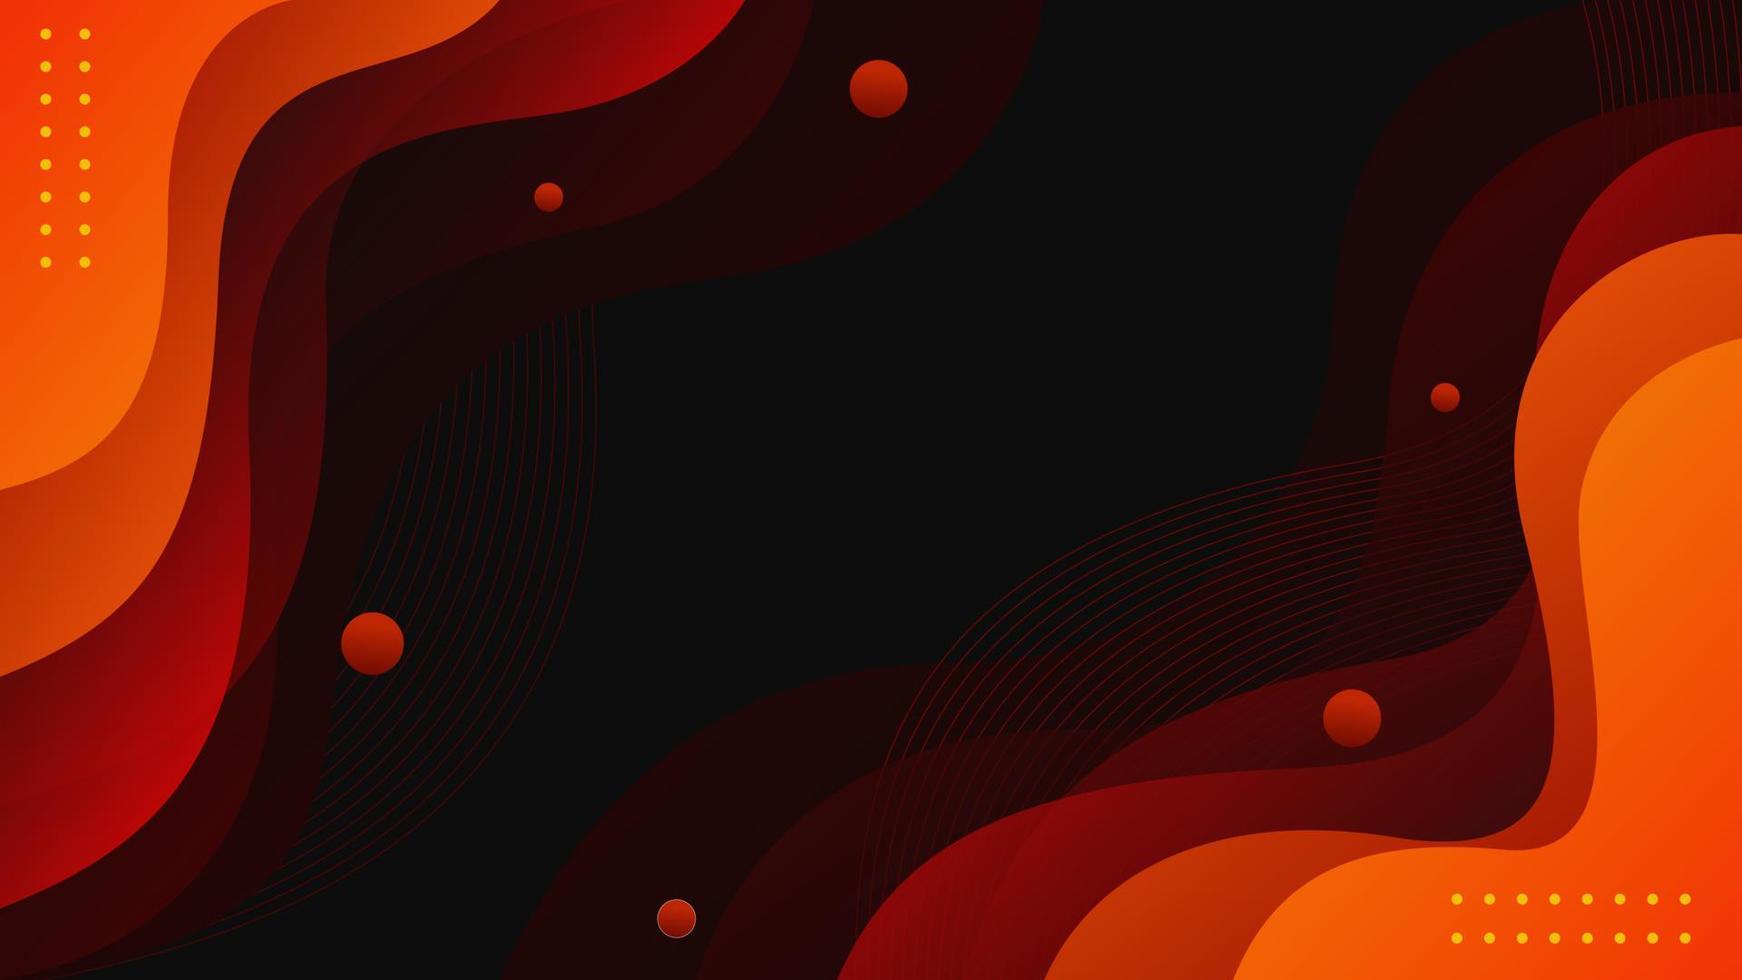 Gradient liquid abstract background design. Dark background with orange fluid wavy shapes. Futuristic vector design